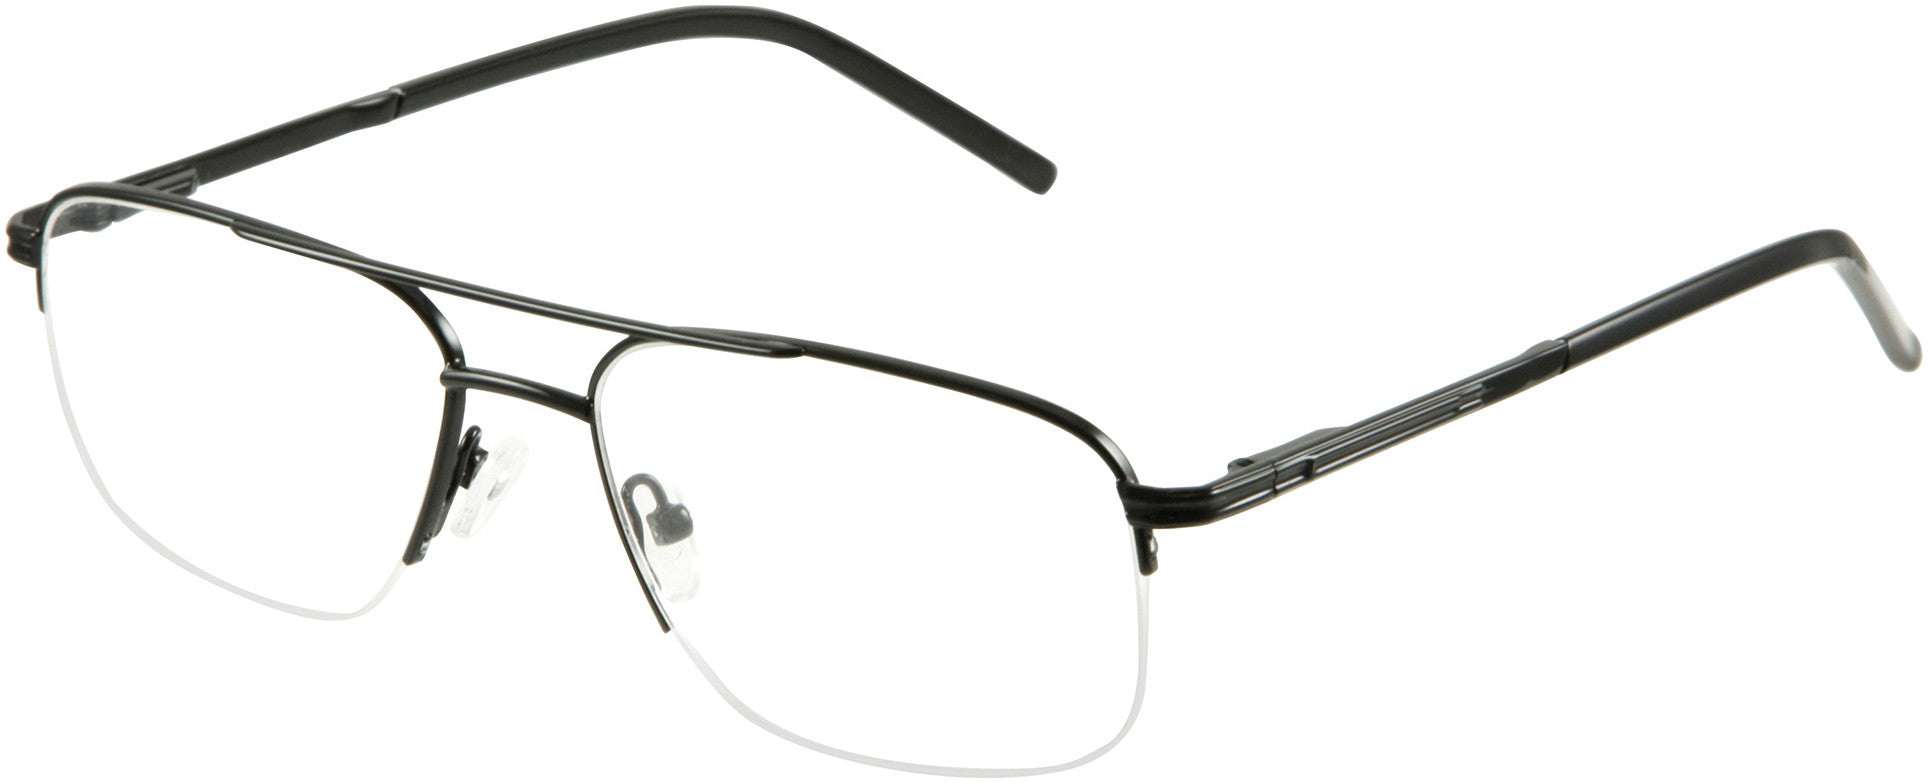 Viva VV0301 Eyeglasses B84-B84 - Black